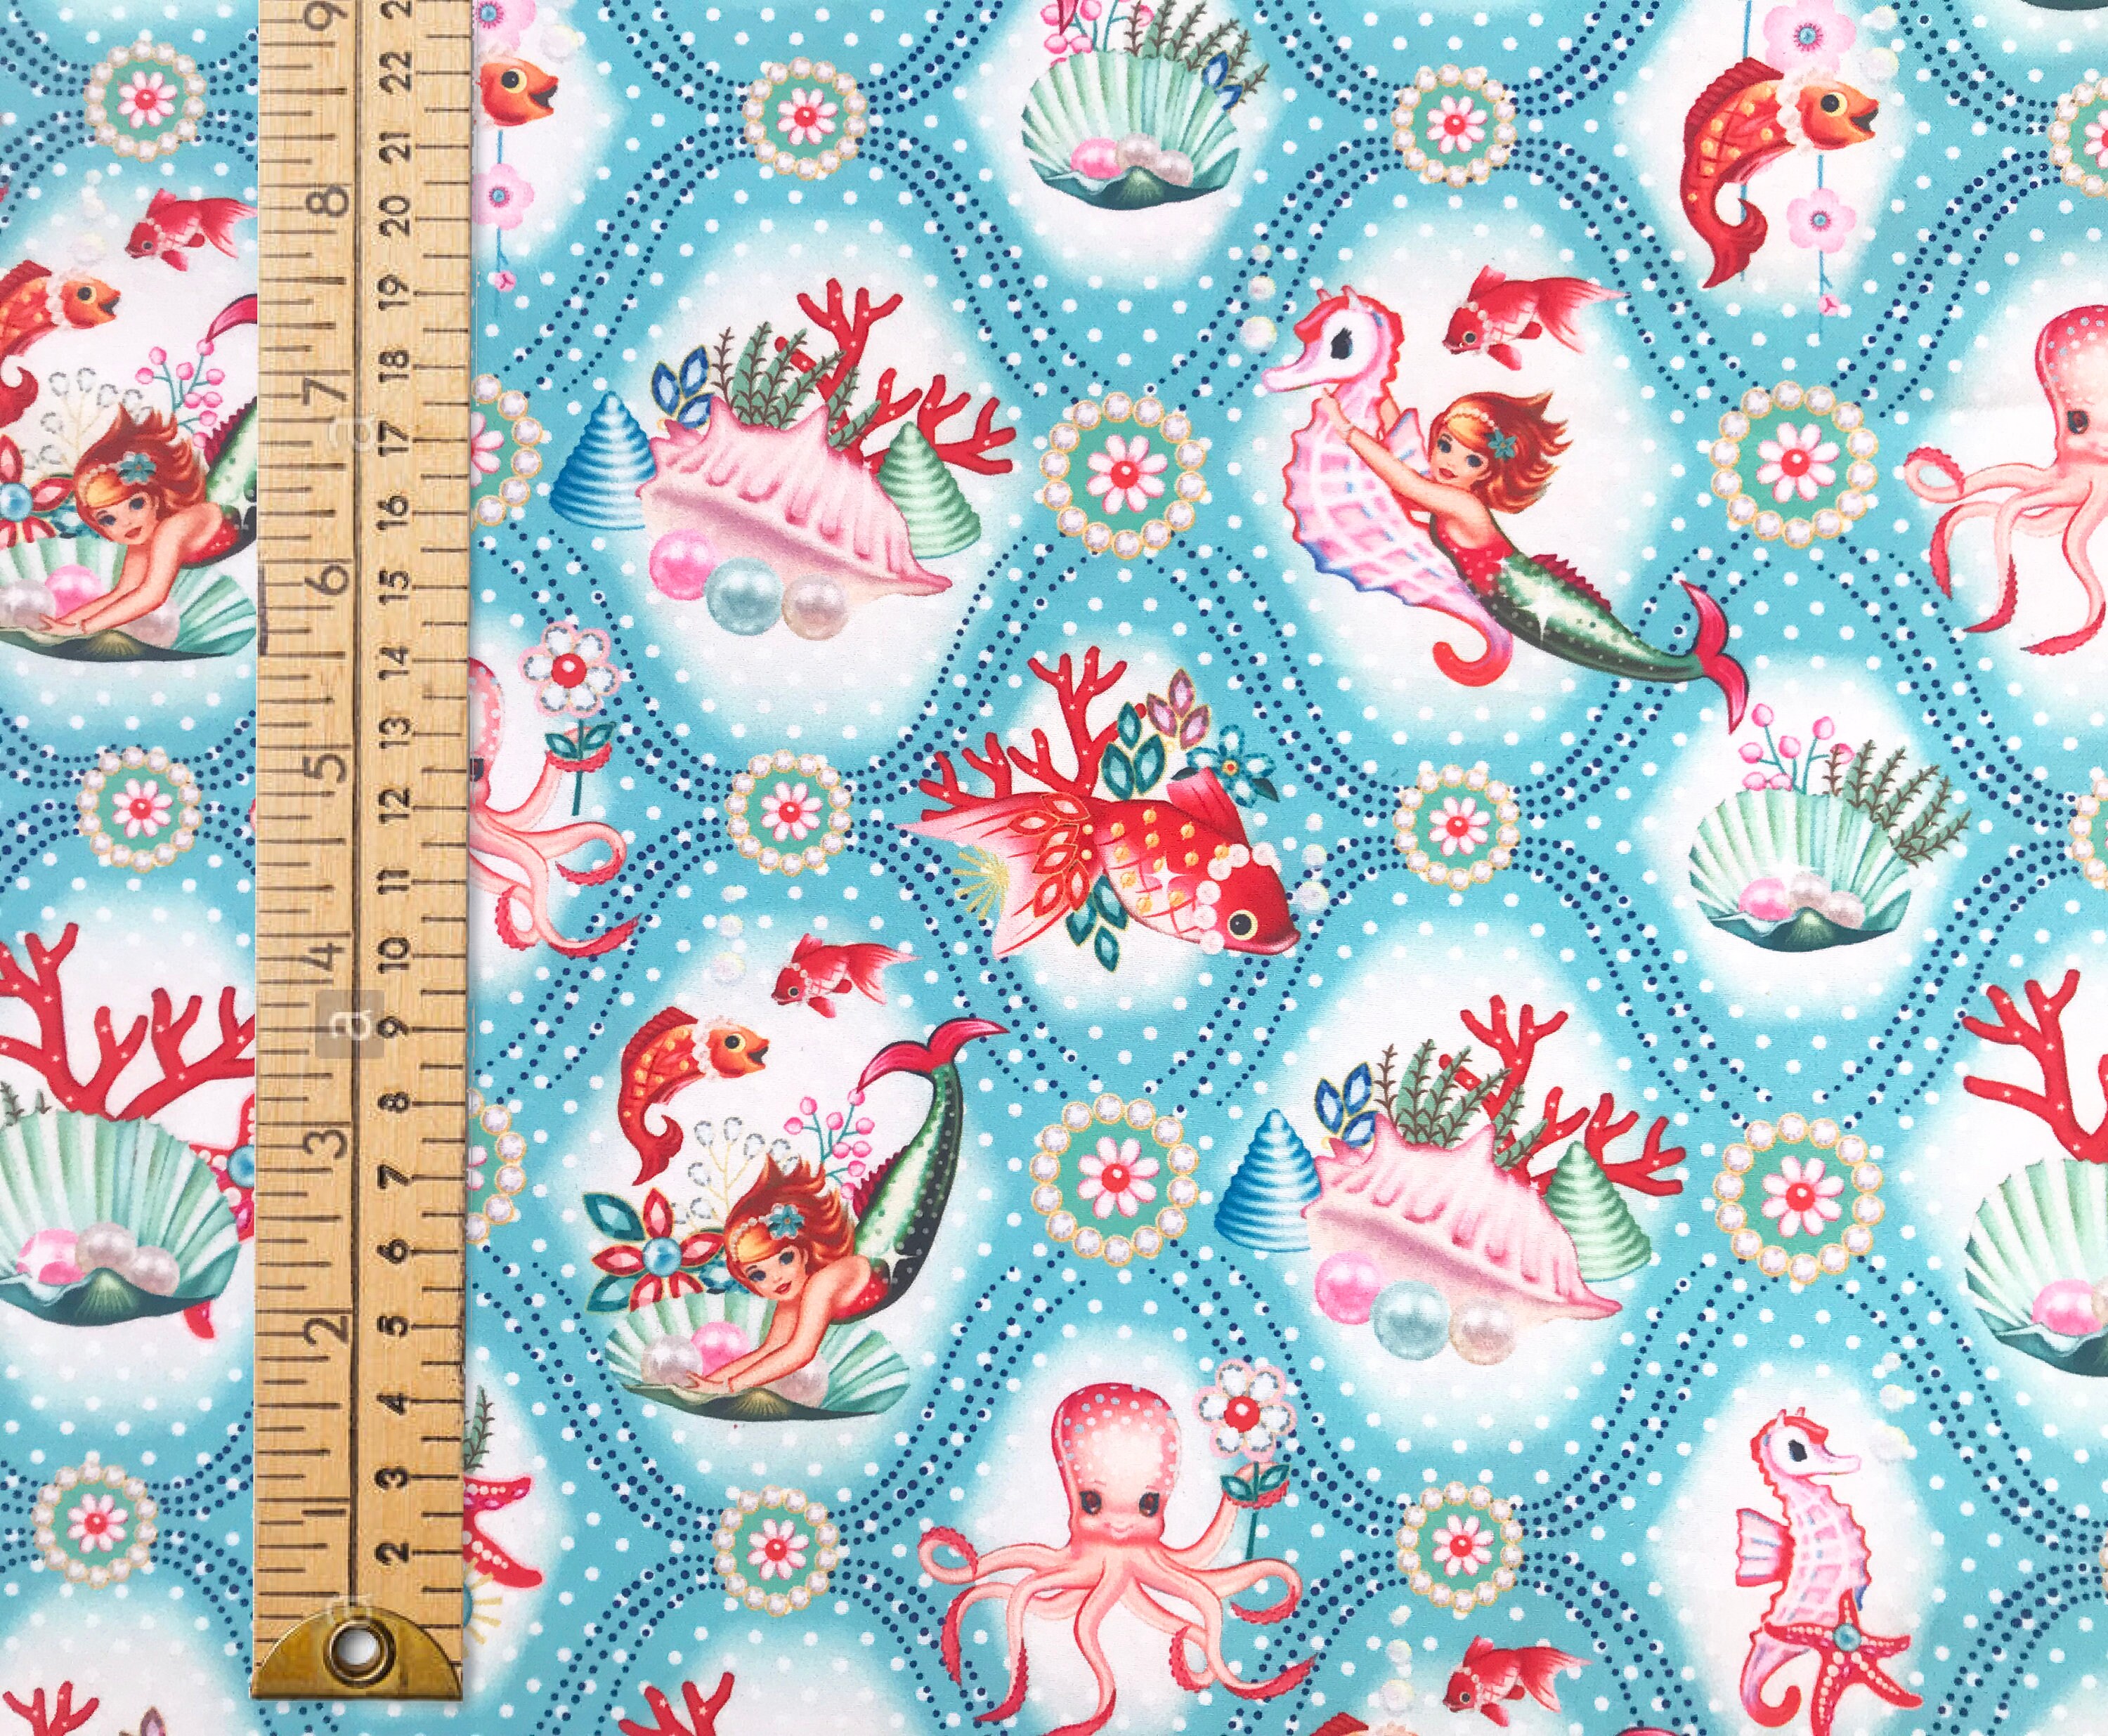 Multi Queen Of The Sea - Male Mermaid Cotton Fabric - 810071694042